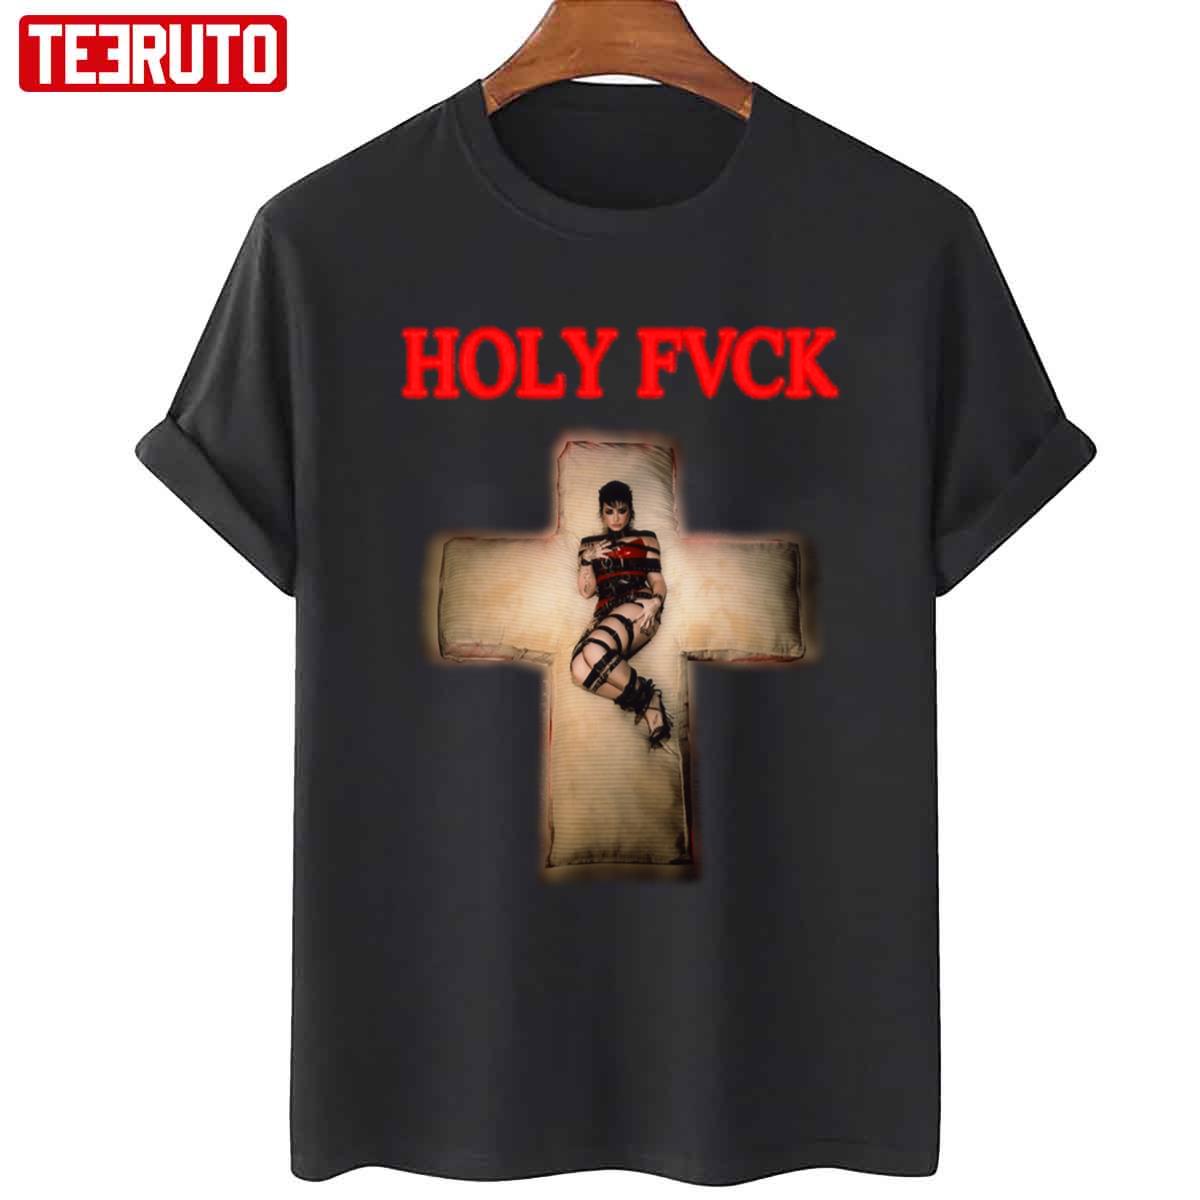 Design Demi Lovato’s Holy Fvck Unisex T-Shirt